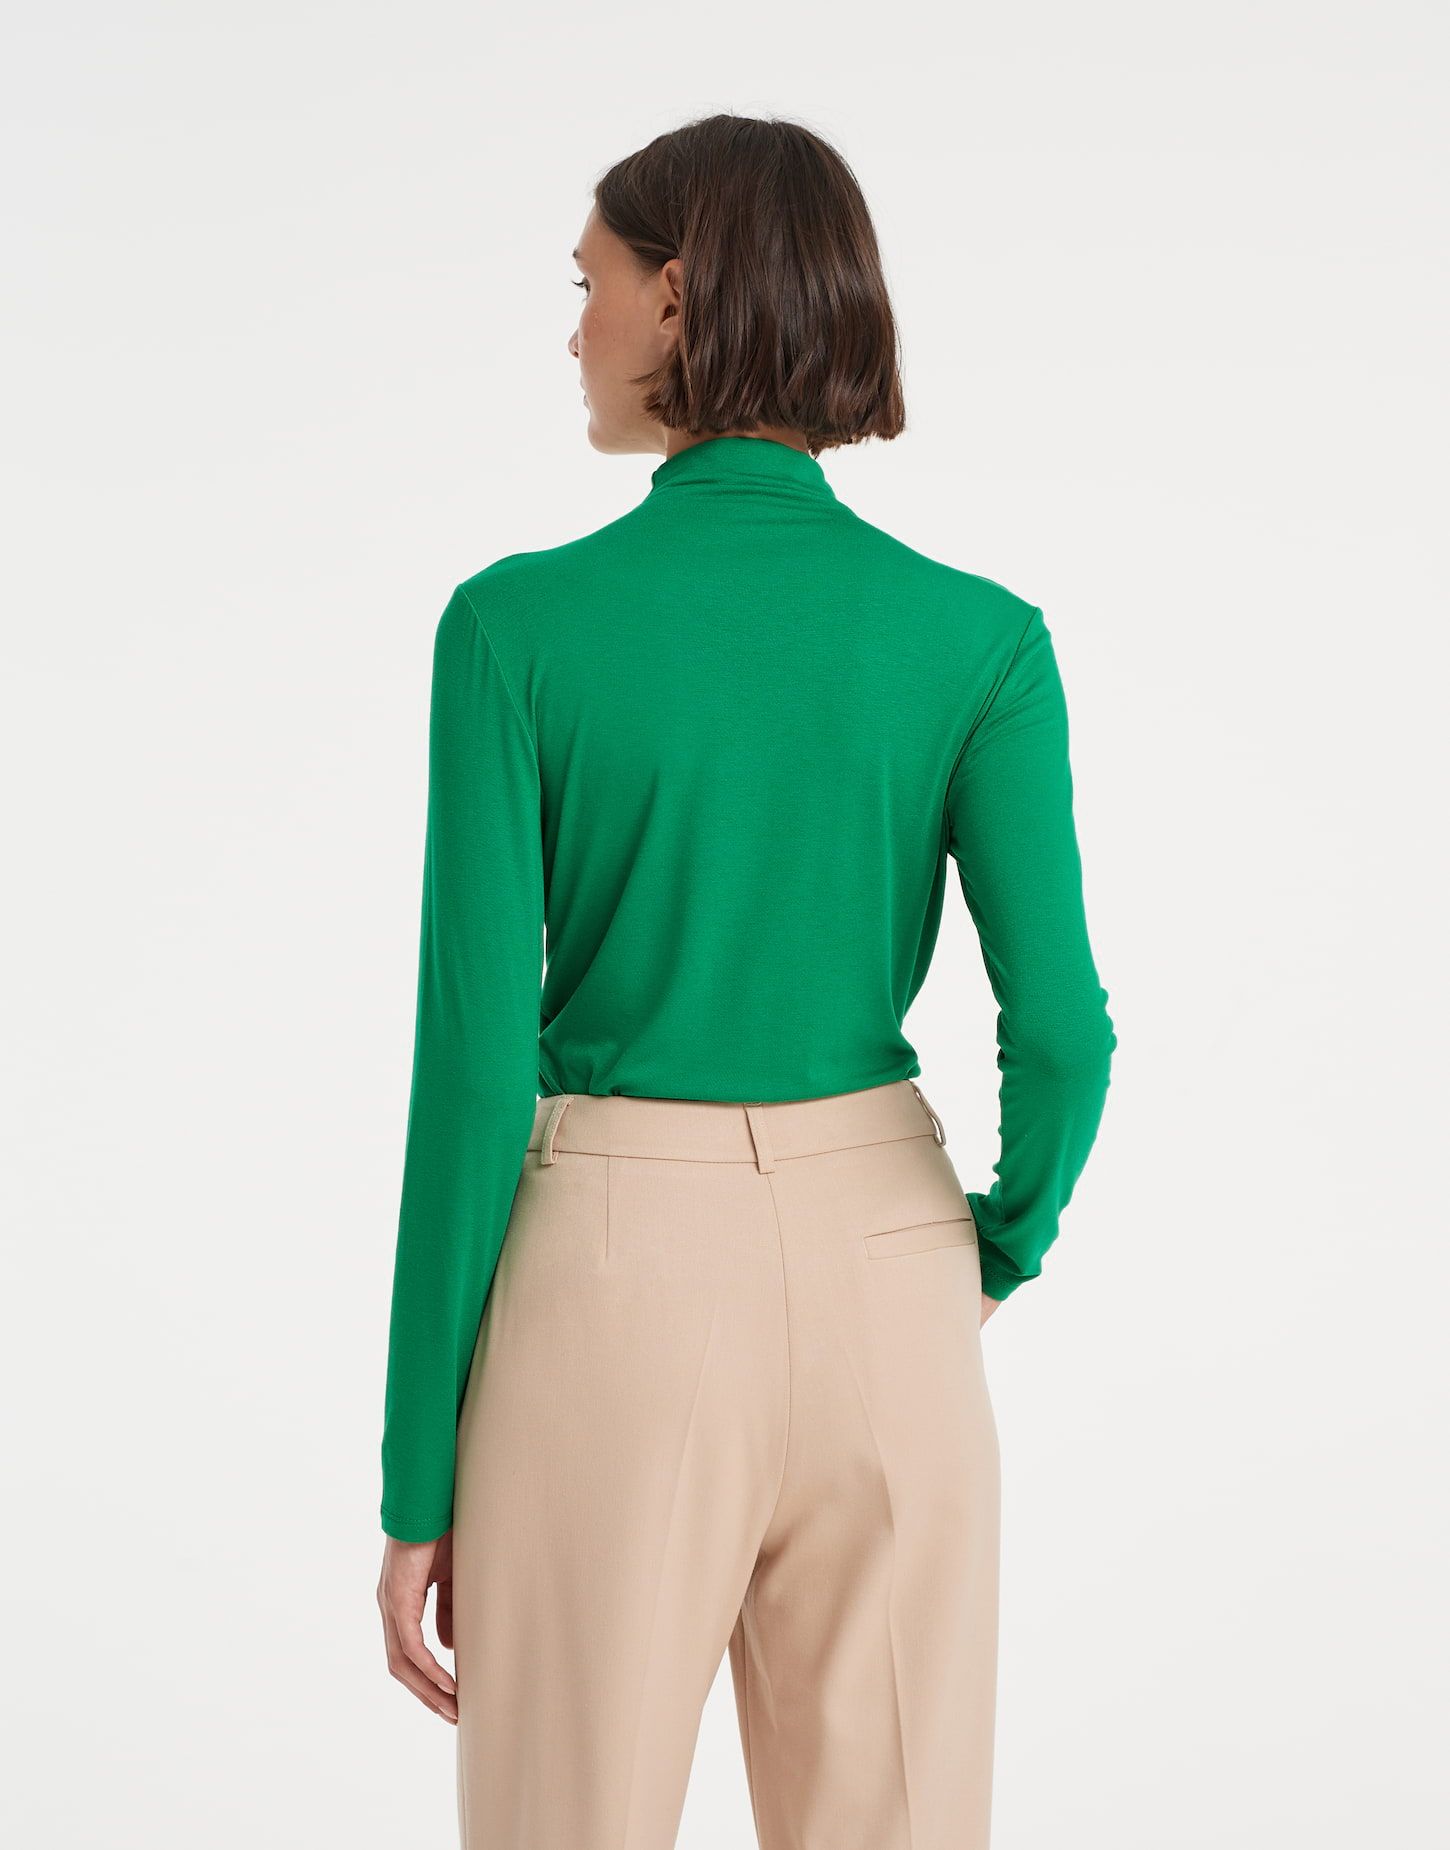 T-shirt bestellen sayar OPUS | Fashion tulip online green Henri\'s